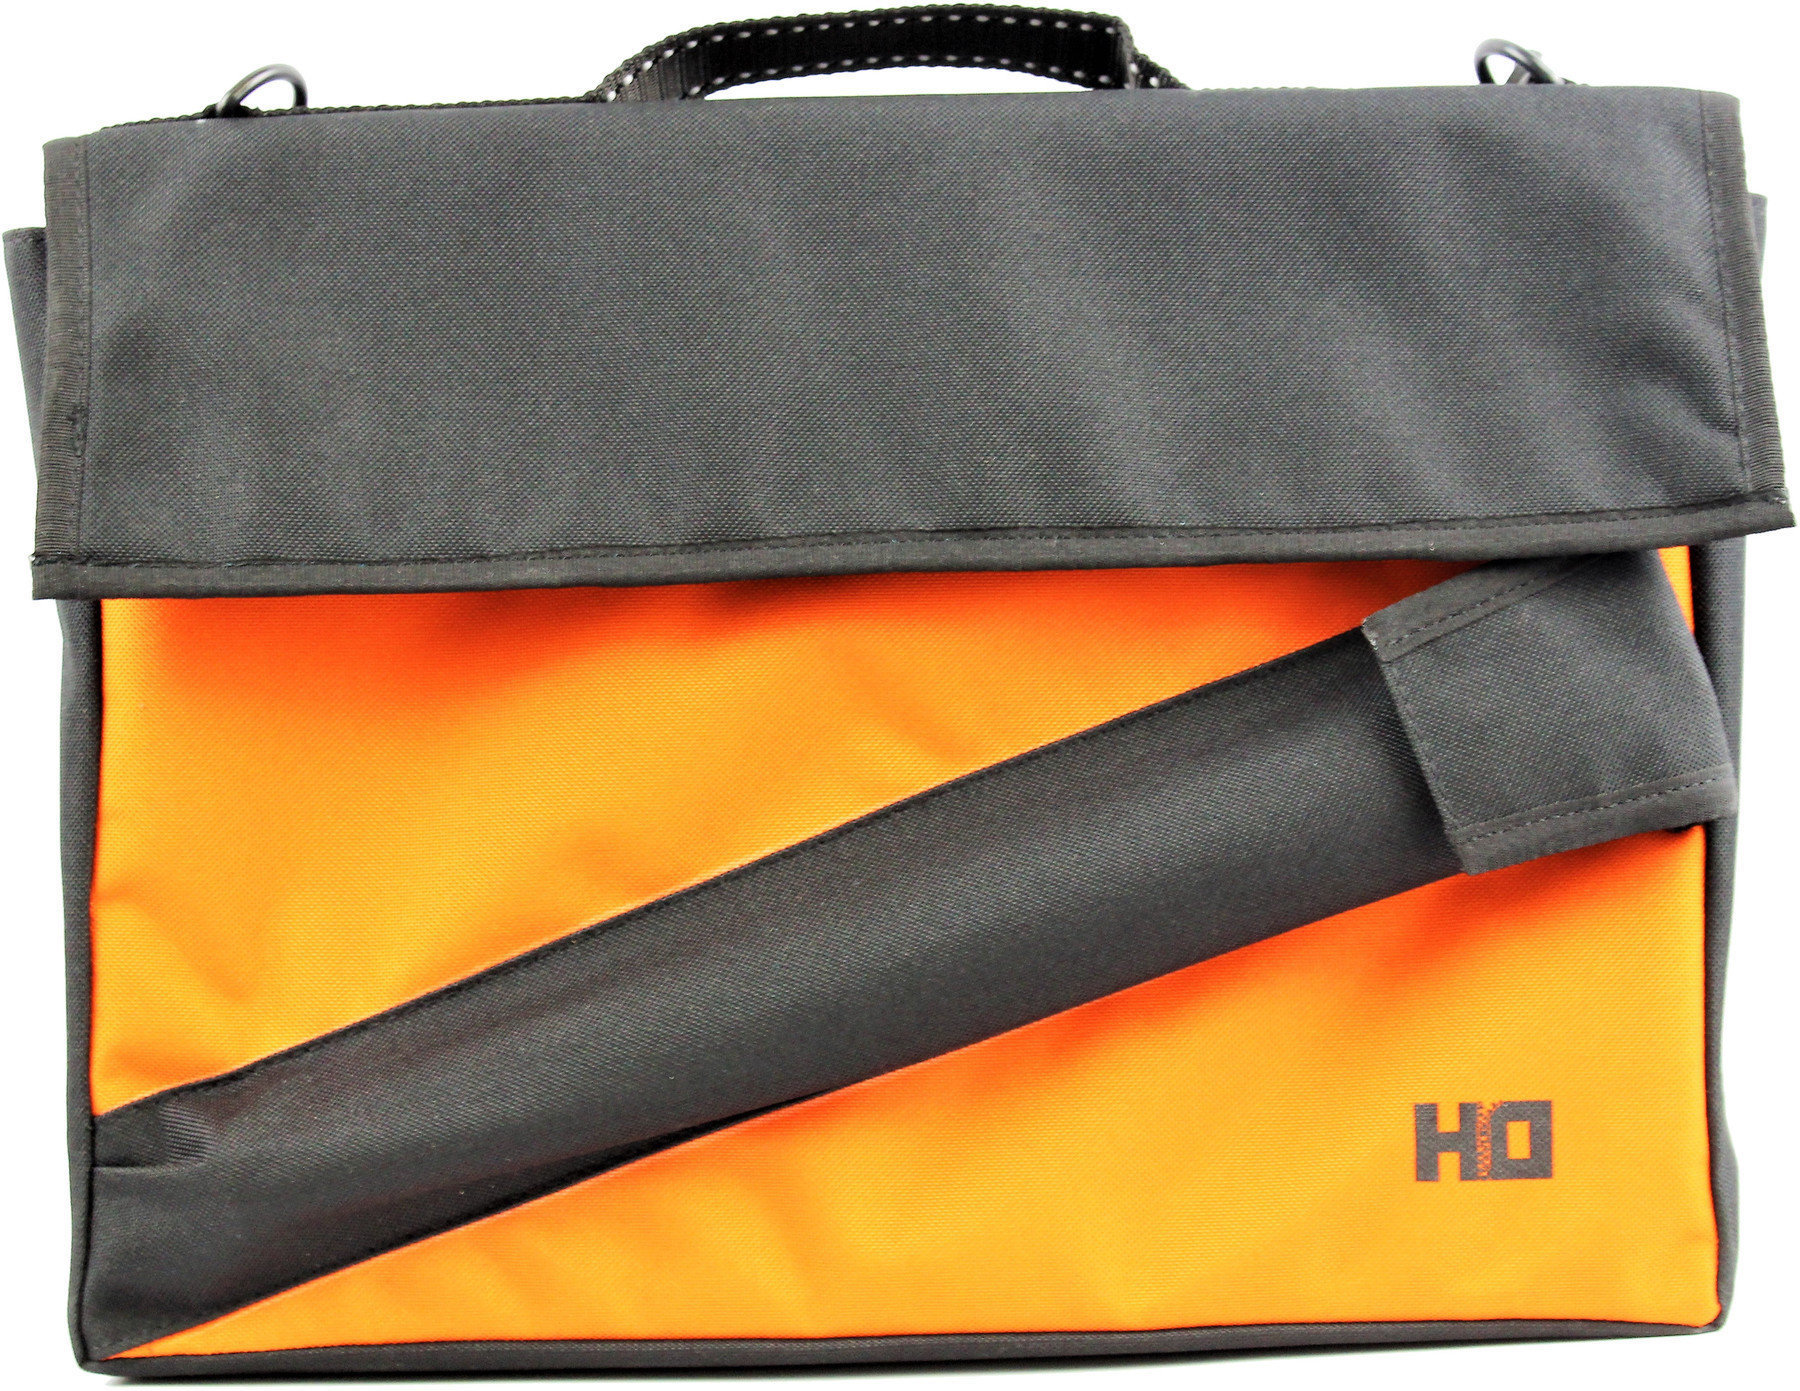 Messenger Bag Hudební Obaly H-O Flautino Orange/Black